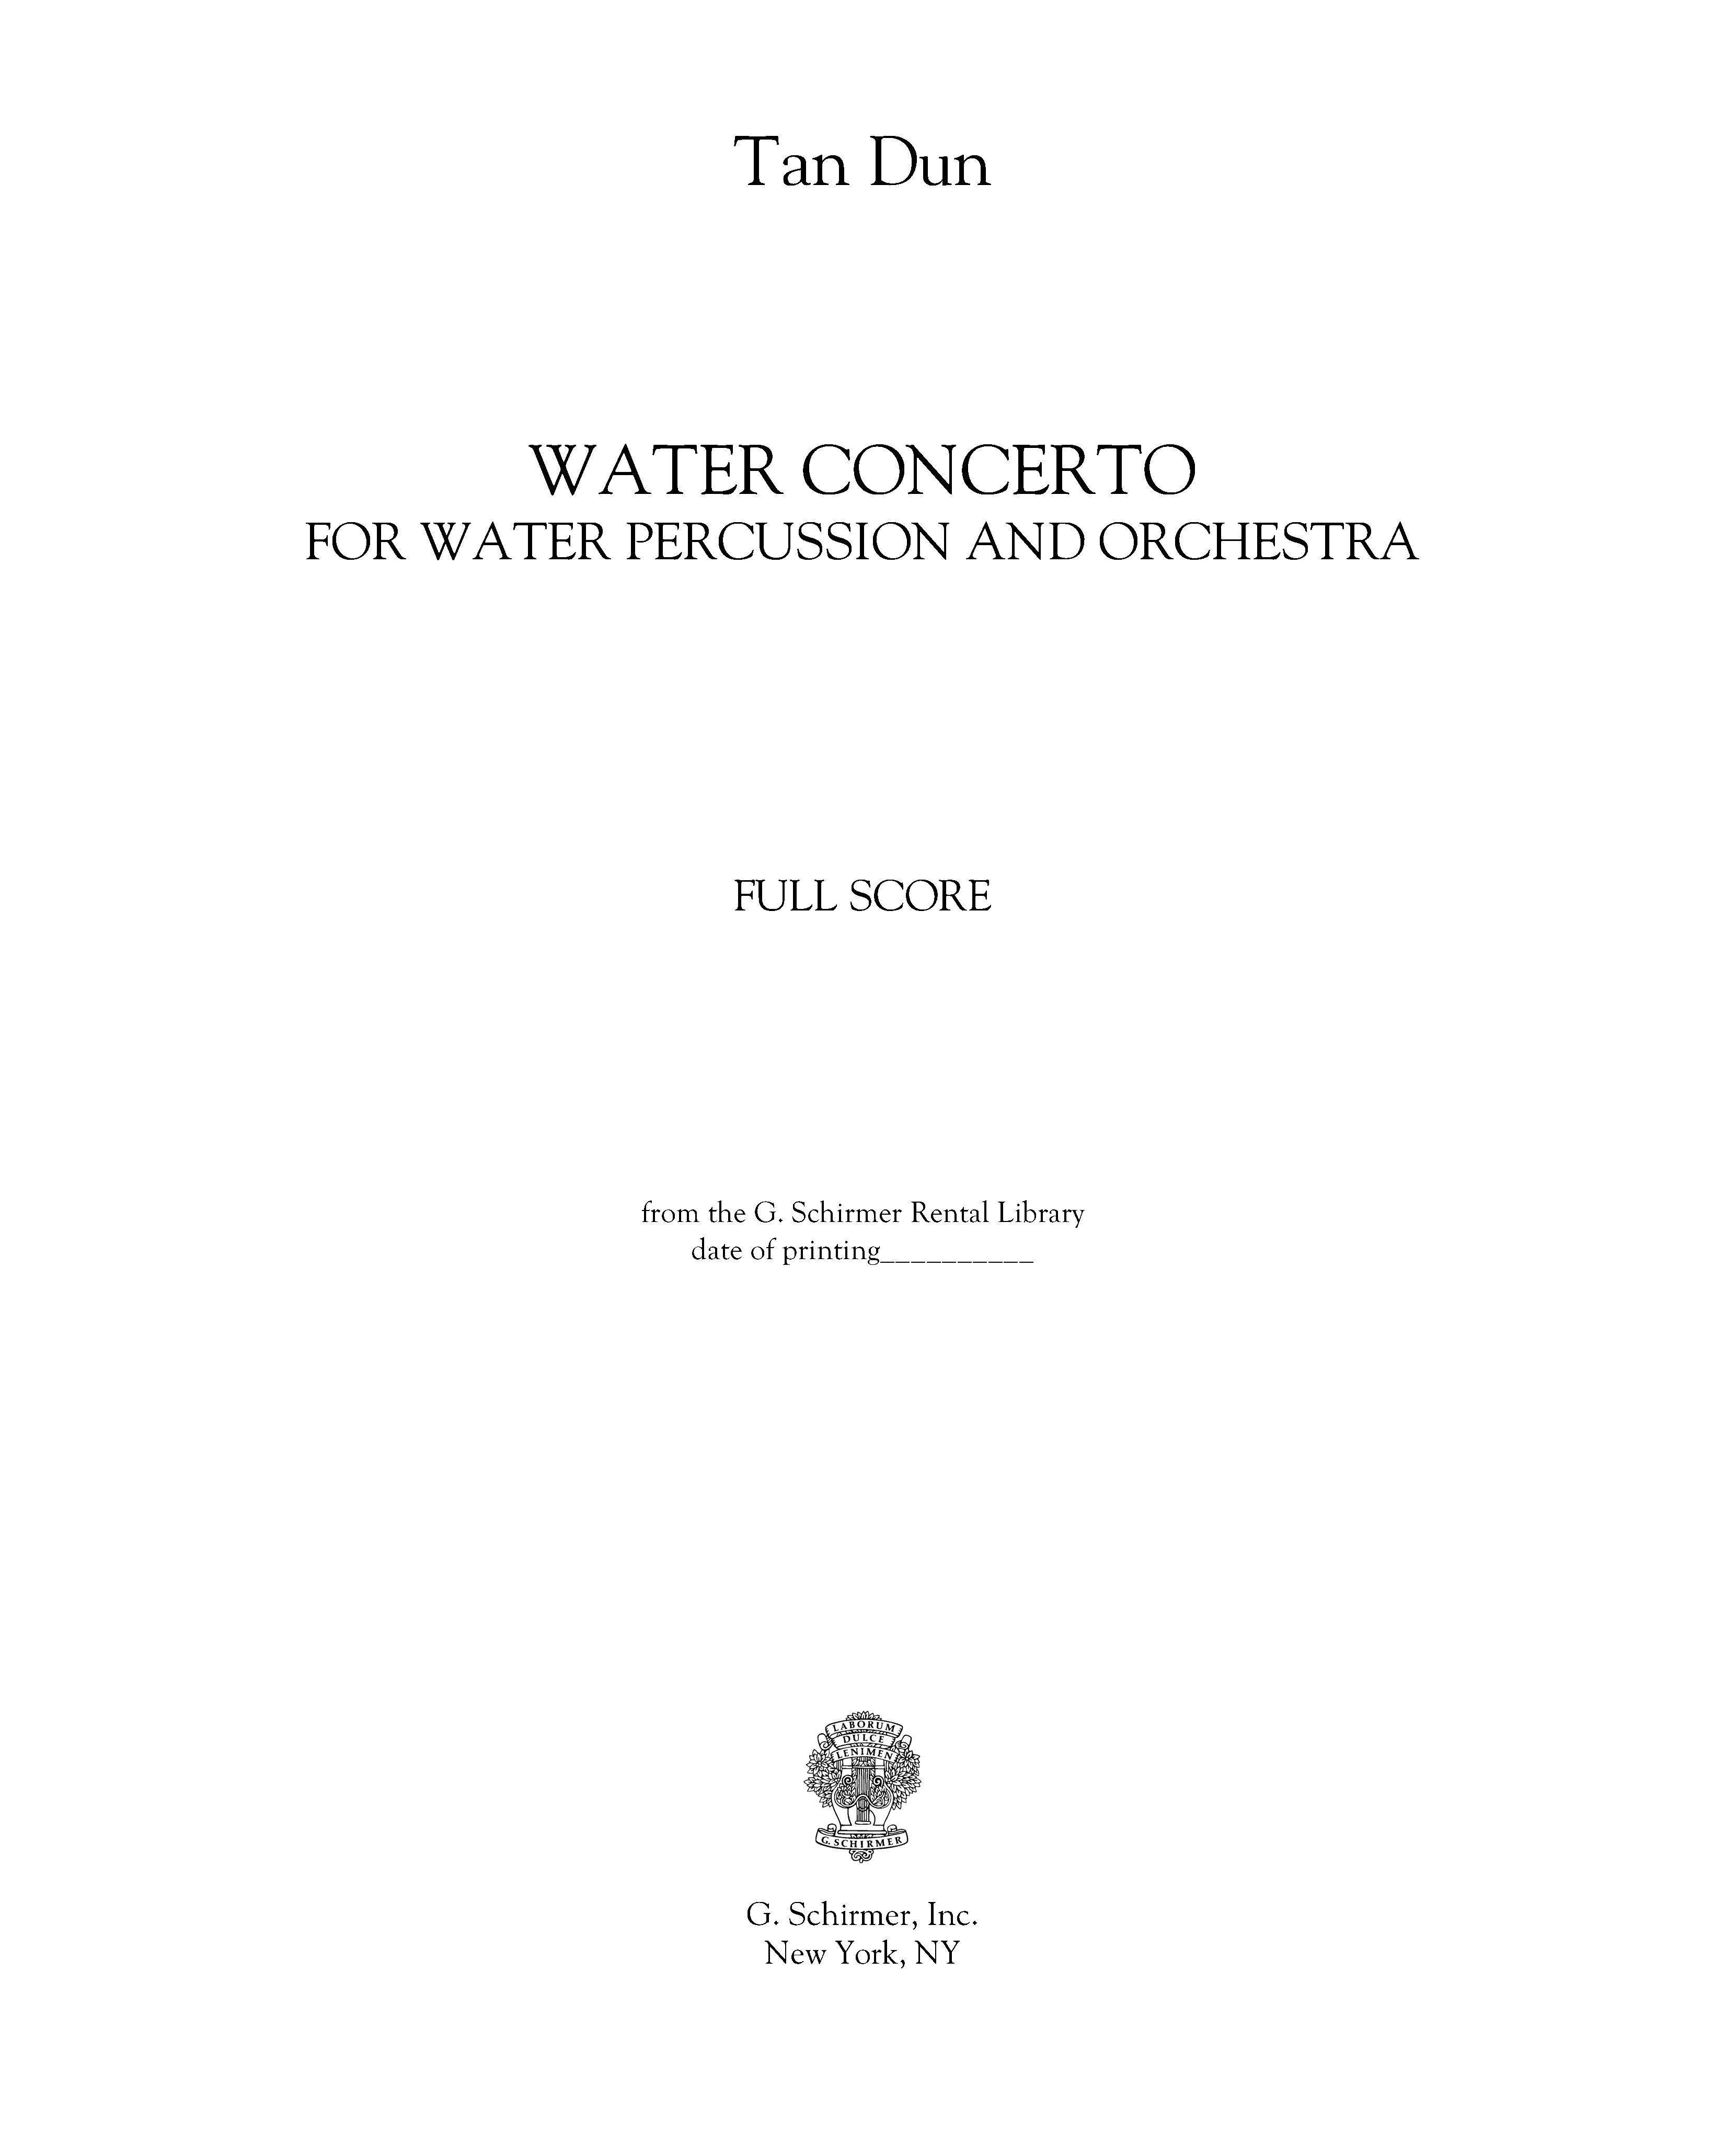 Water Concerto